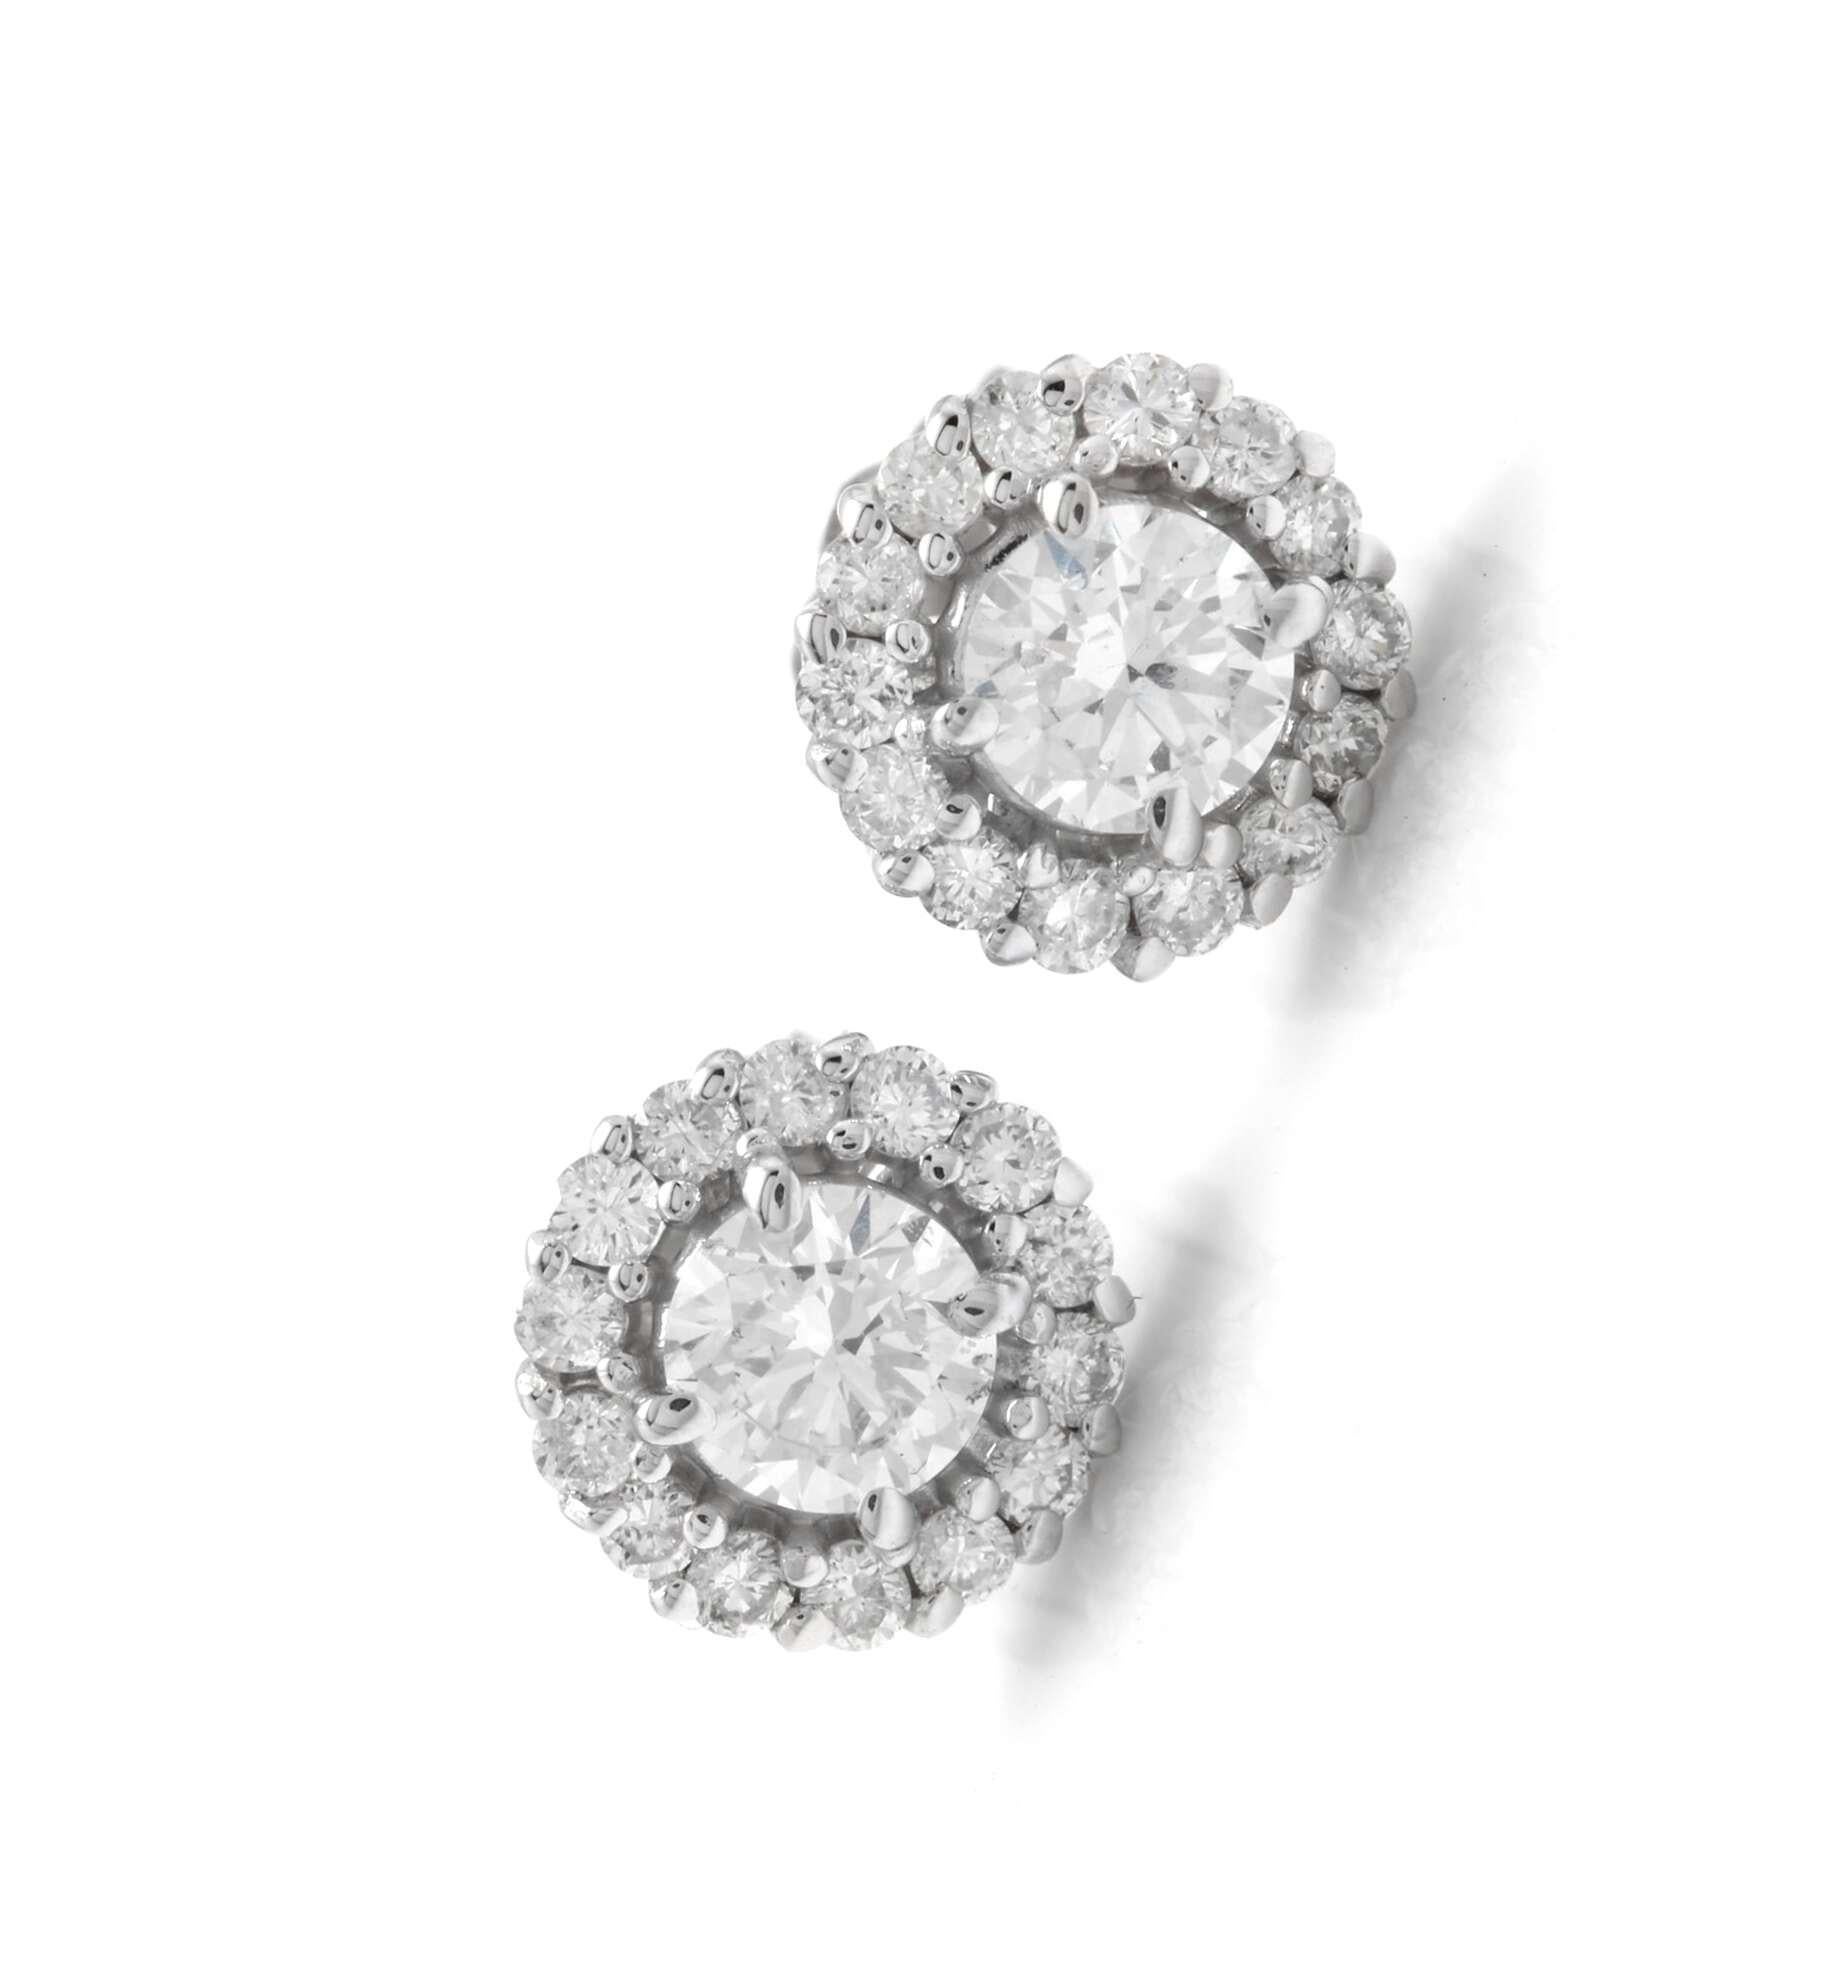 1 carat diamond earrings price philippines